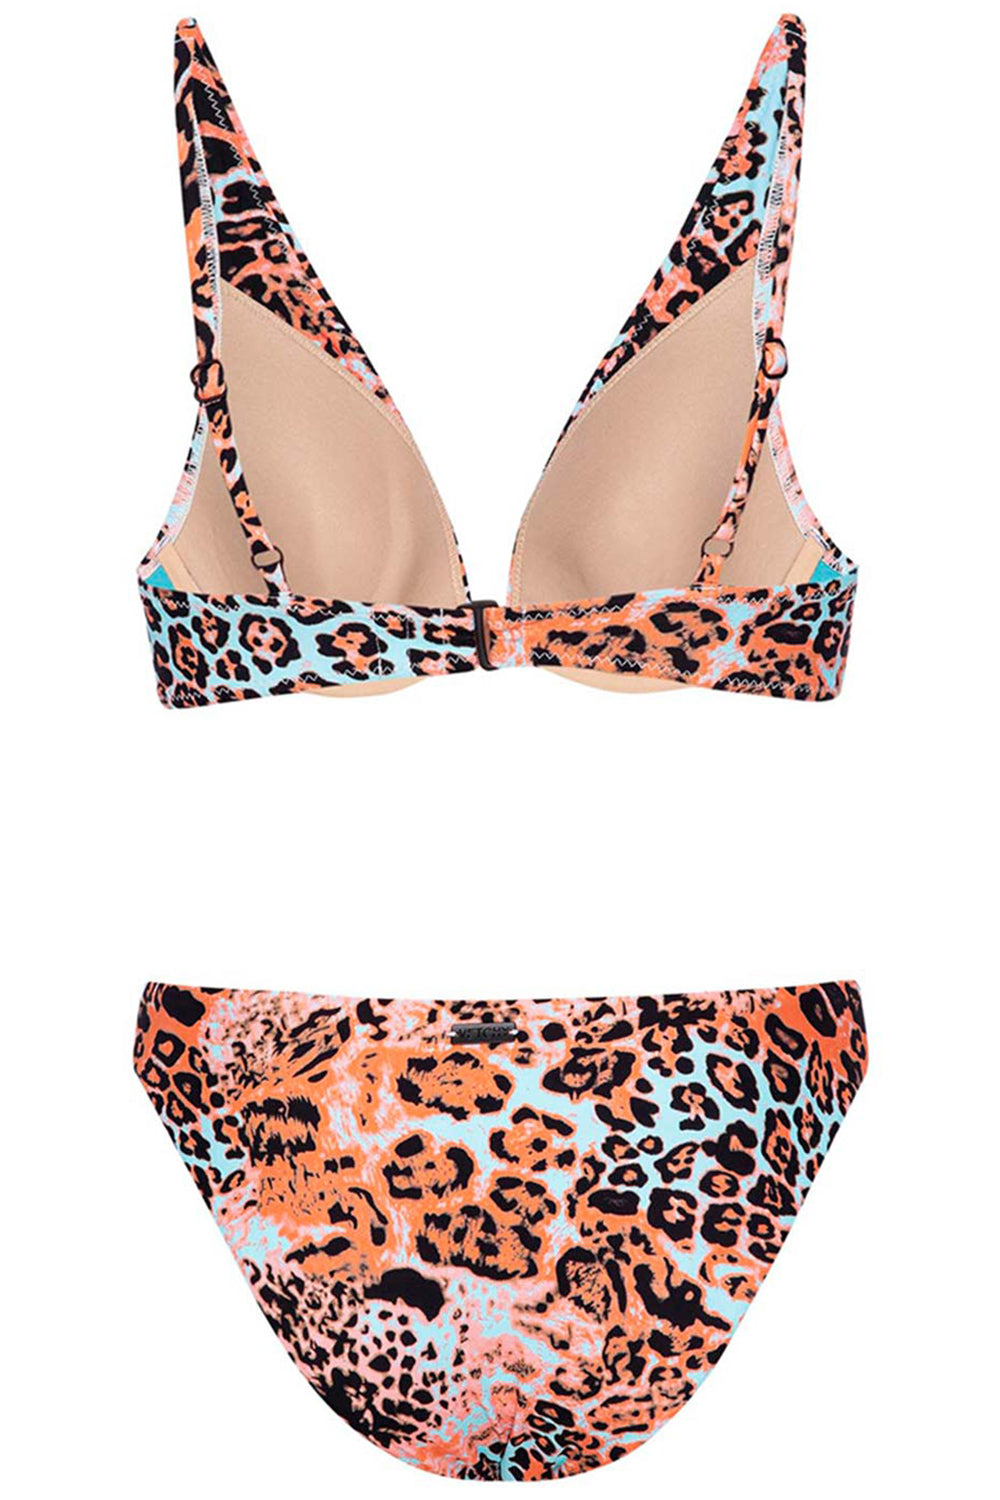 Leo Bikini Leopard Set on white background back view.